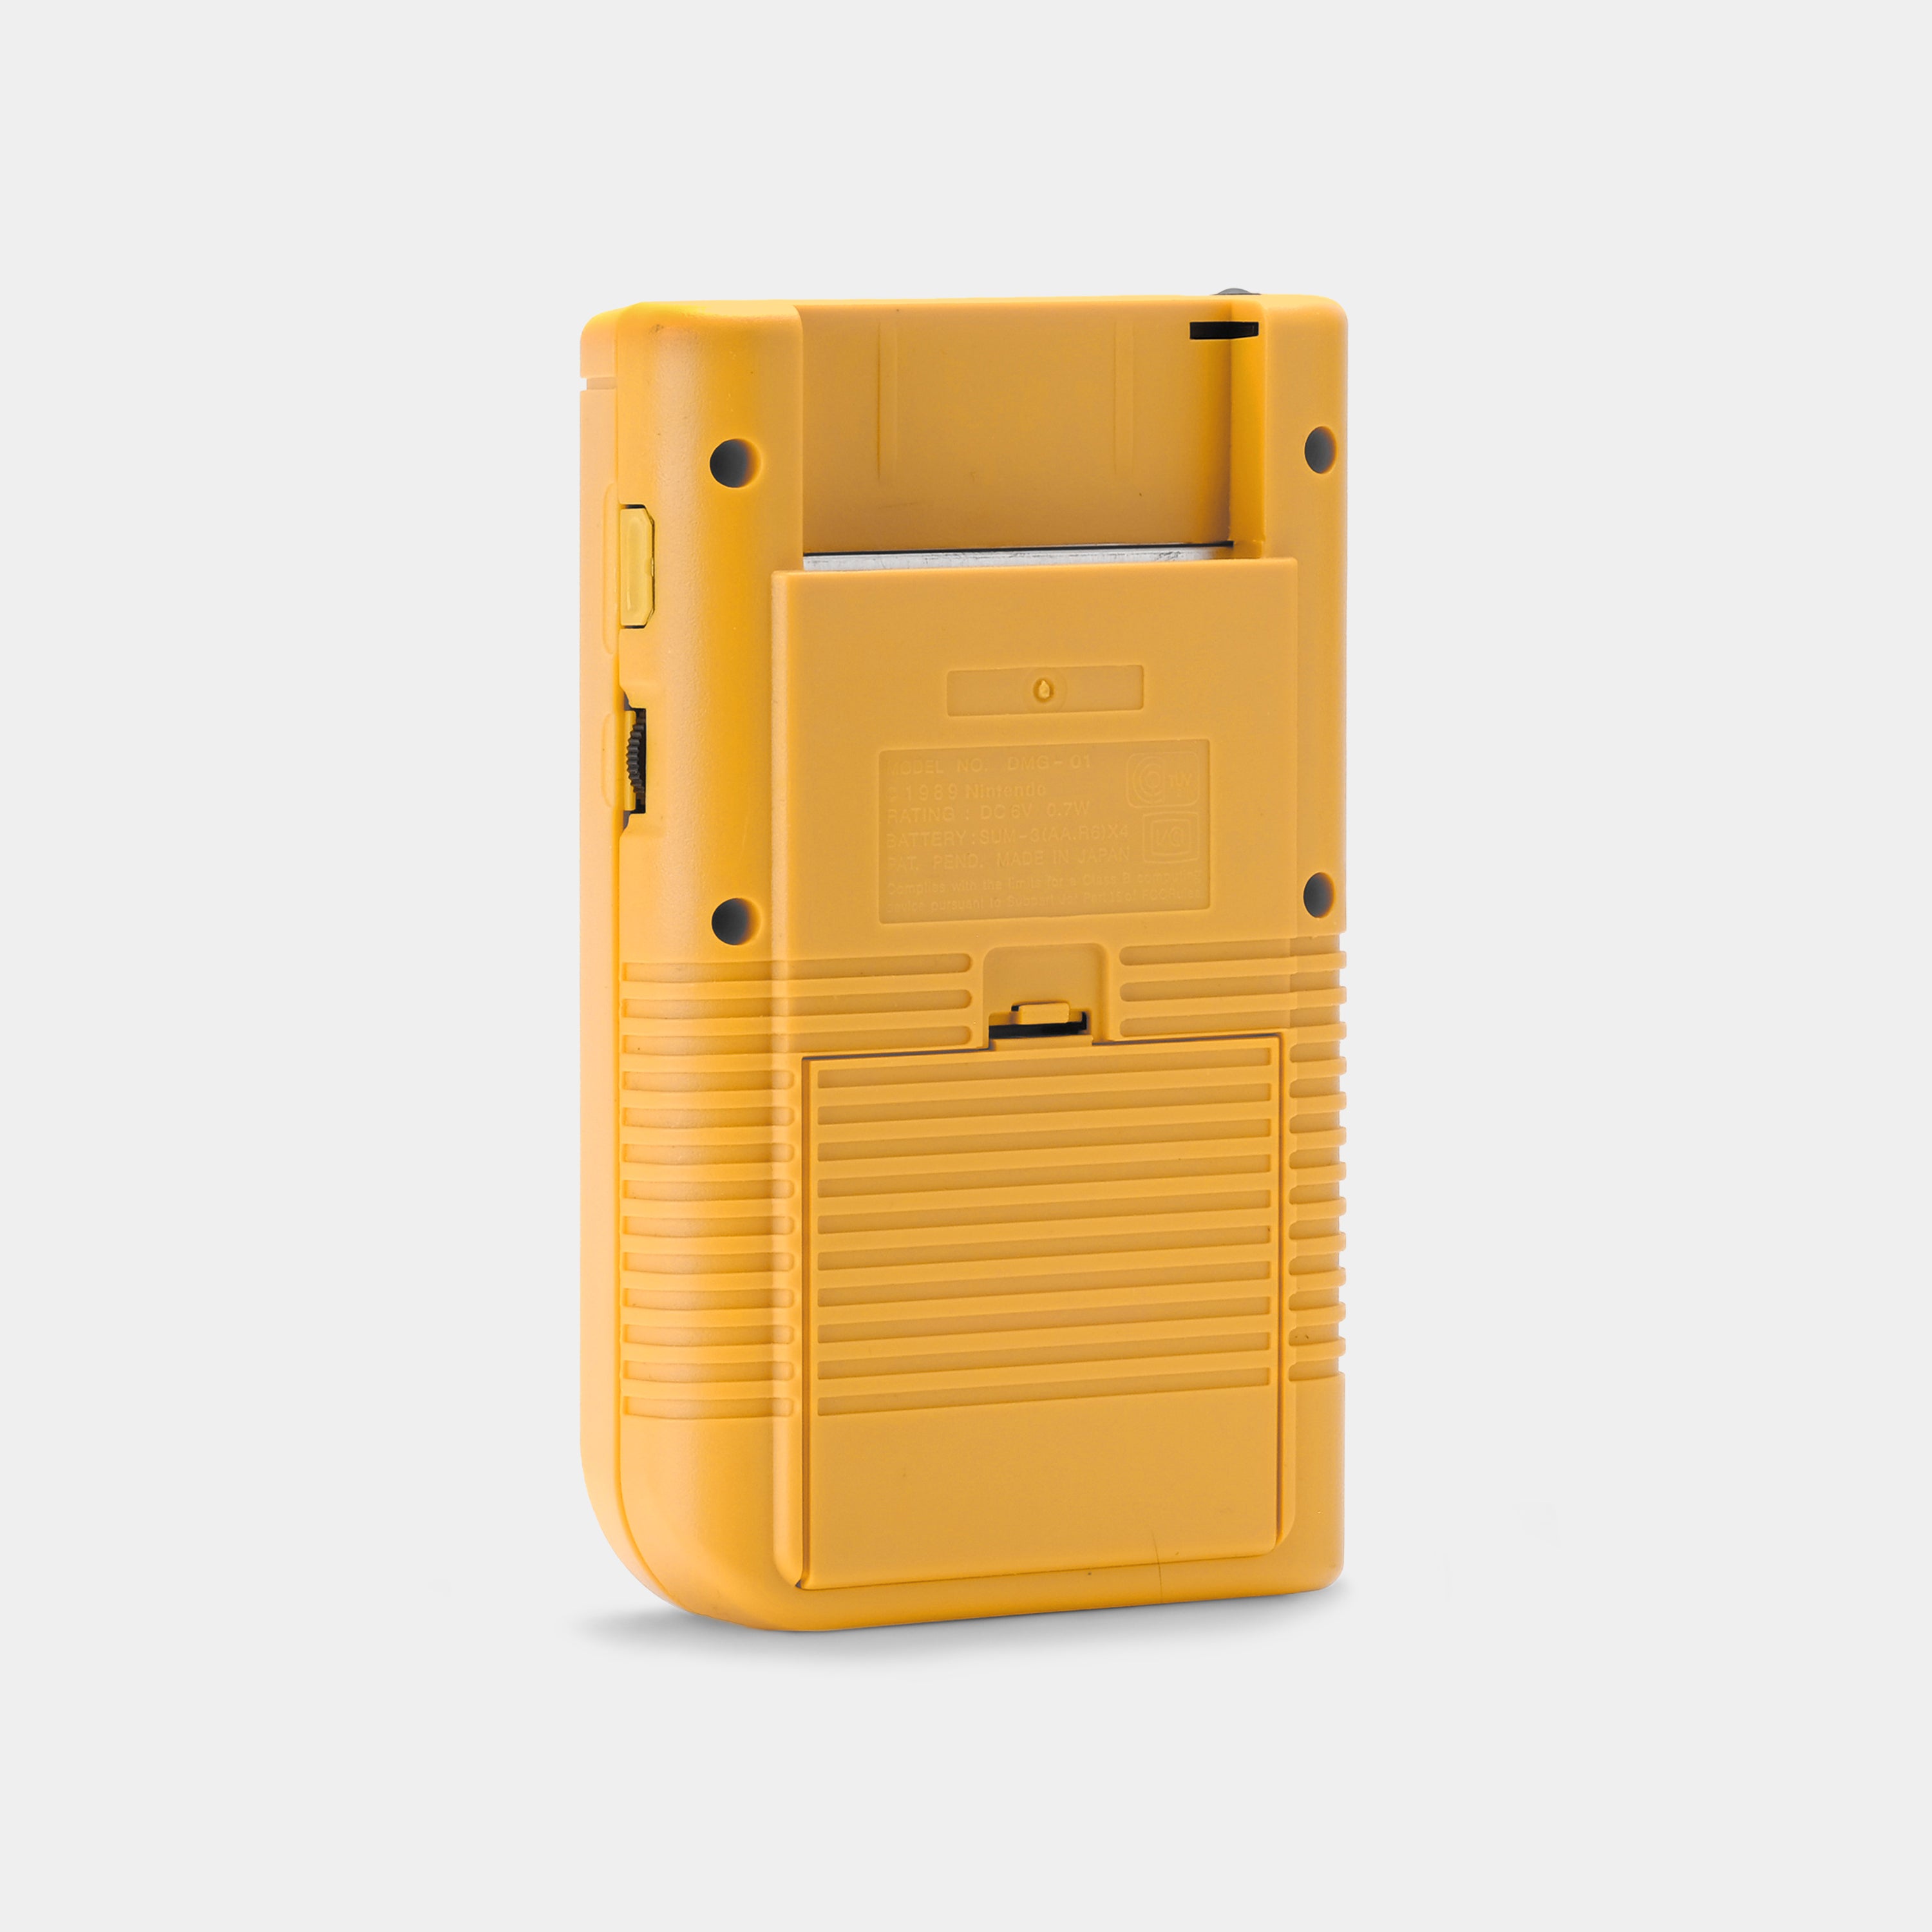 Nintendo Game Boy Color (Yellow) Refurbished Smart Generation